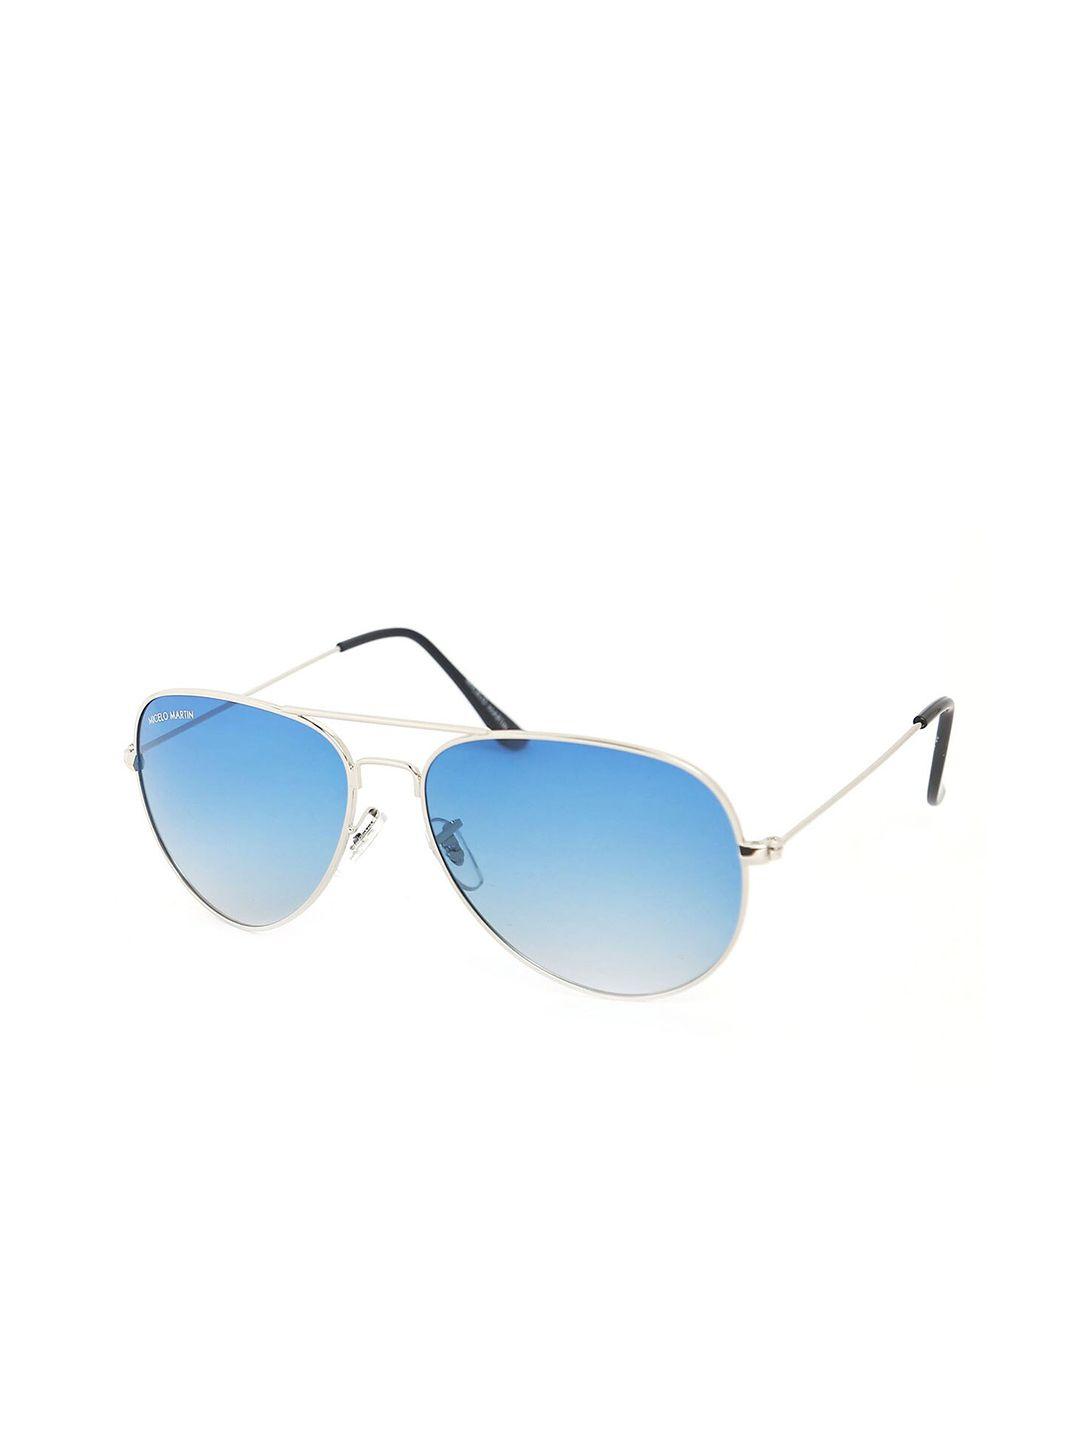 micelo martin unisex blue lens & silver-toned aviator sunglasses mm1001 c6